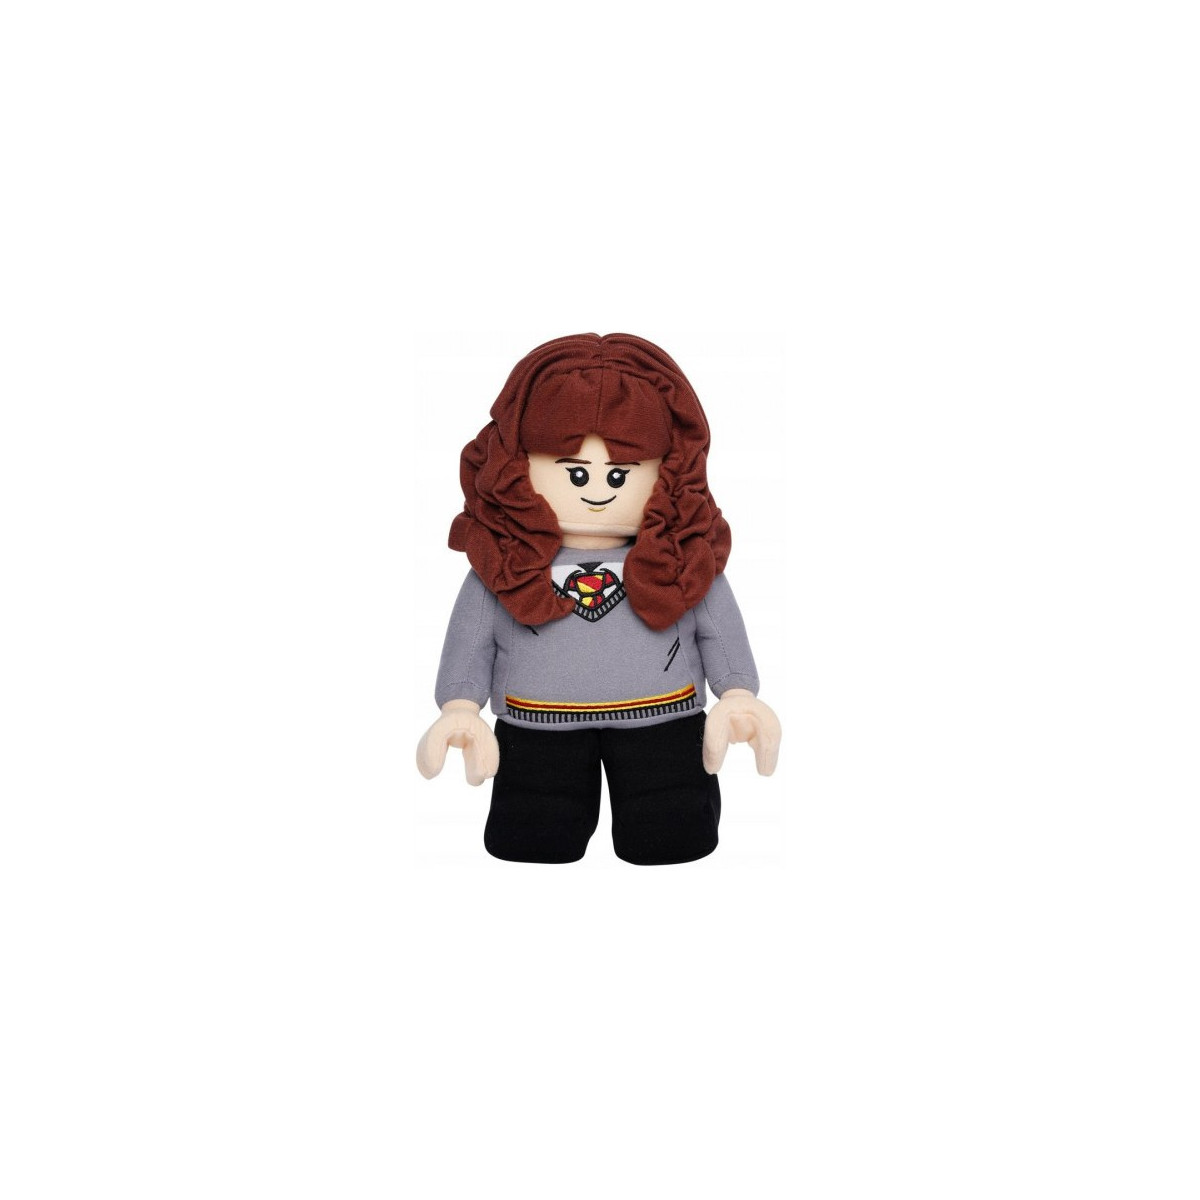 Lego 342750 - Harry Potter Hermione Granger™ Plush